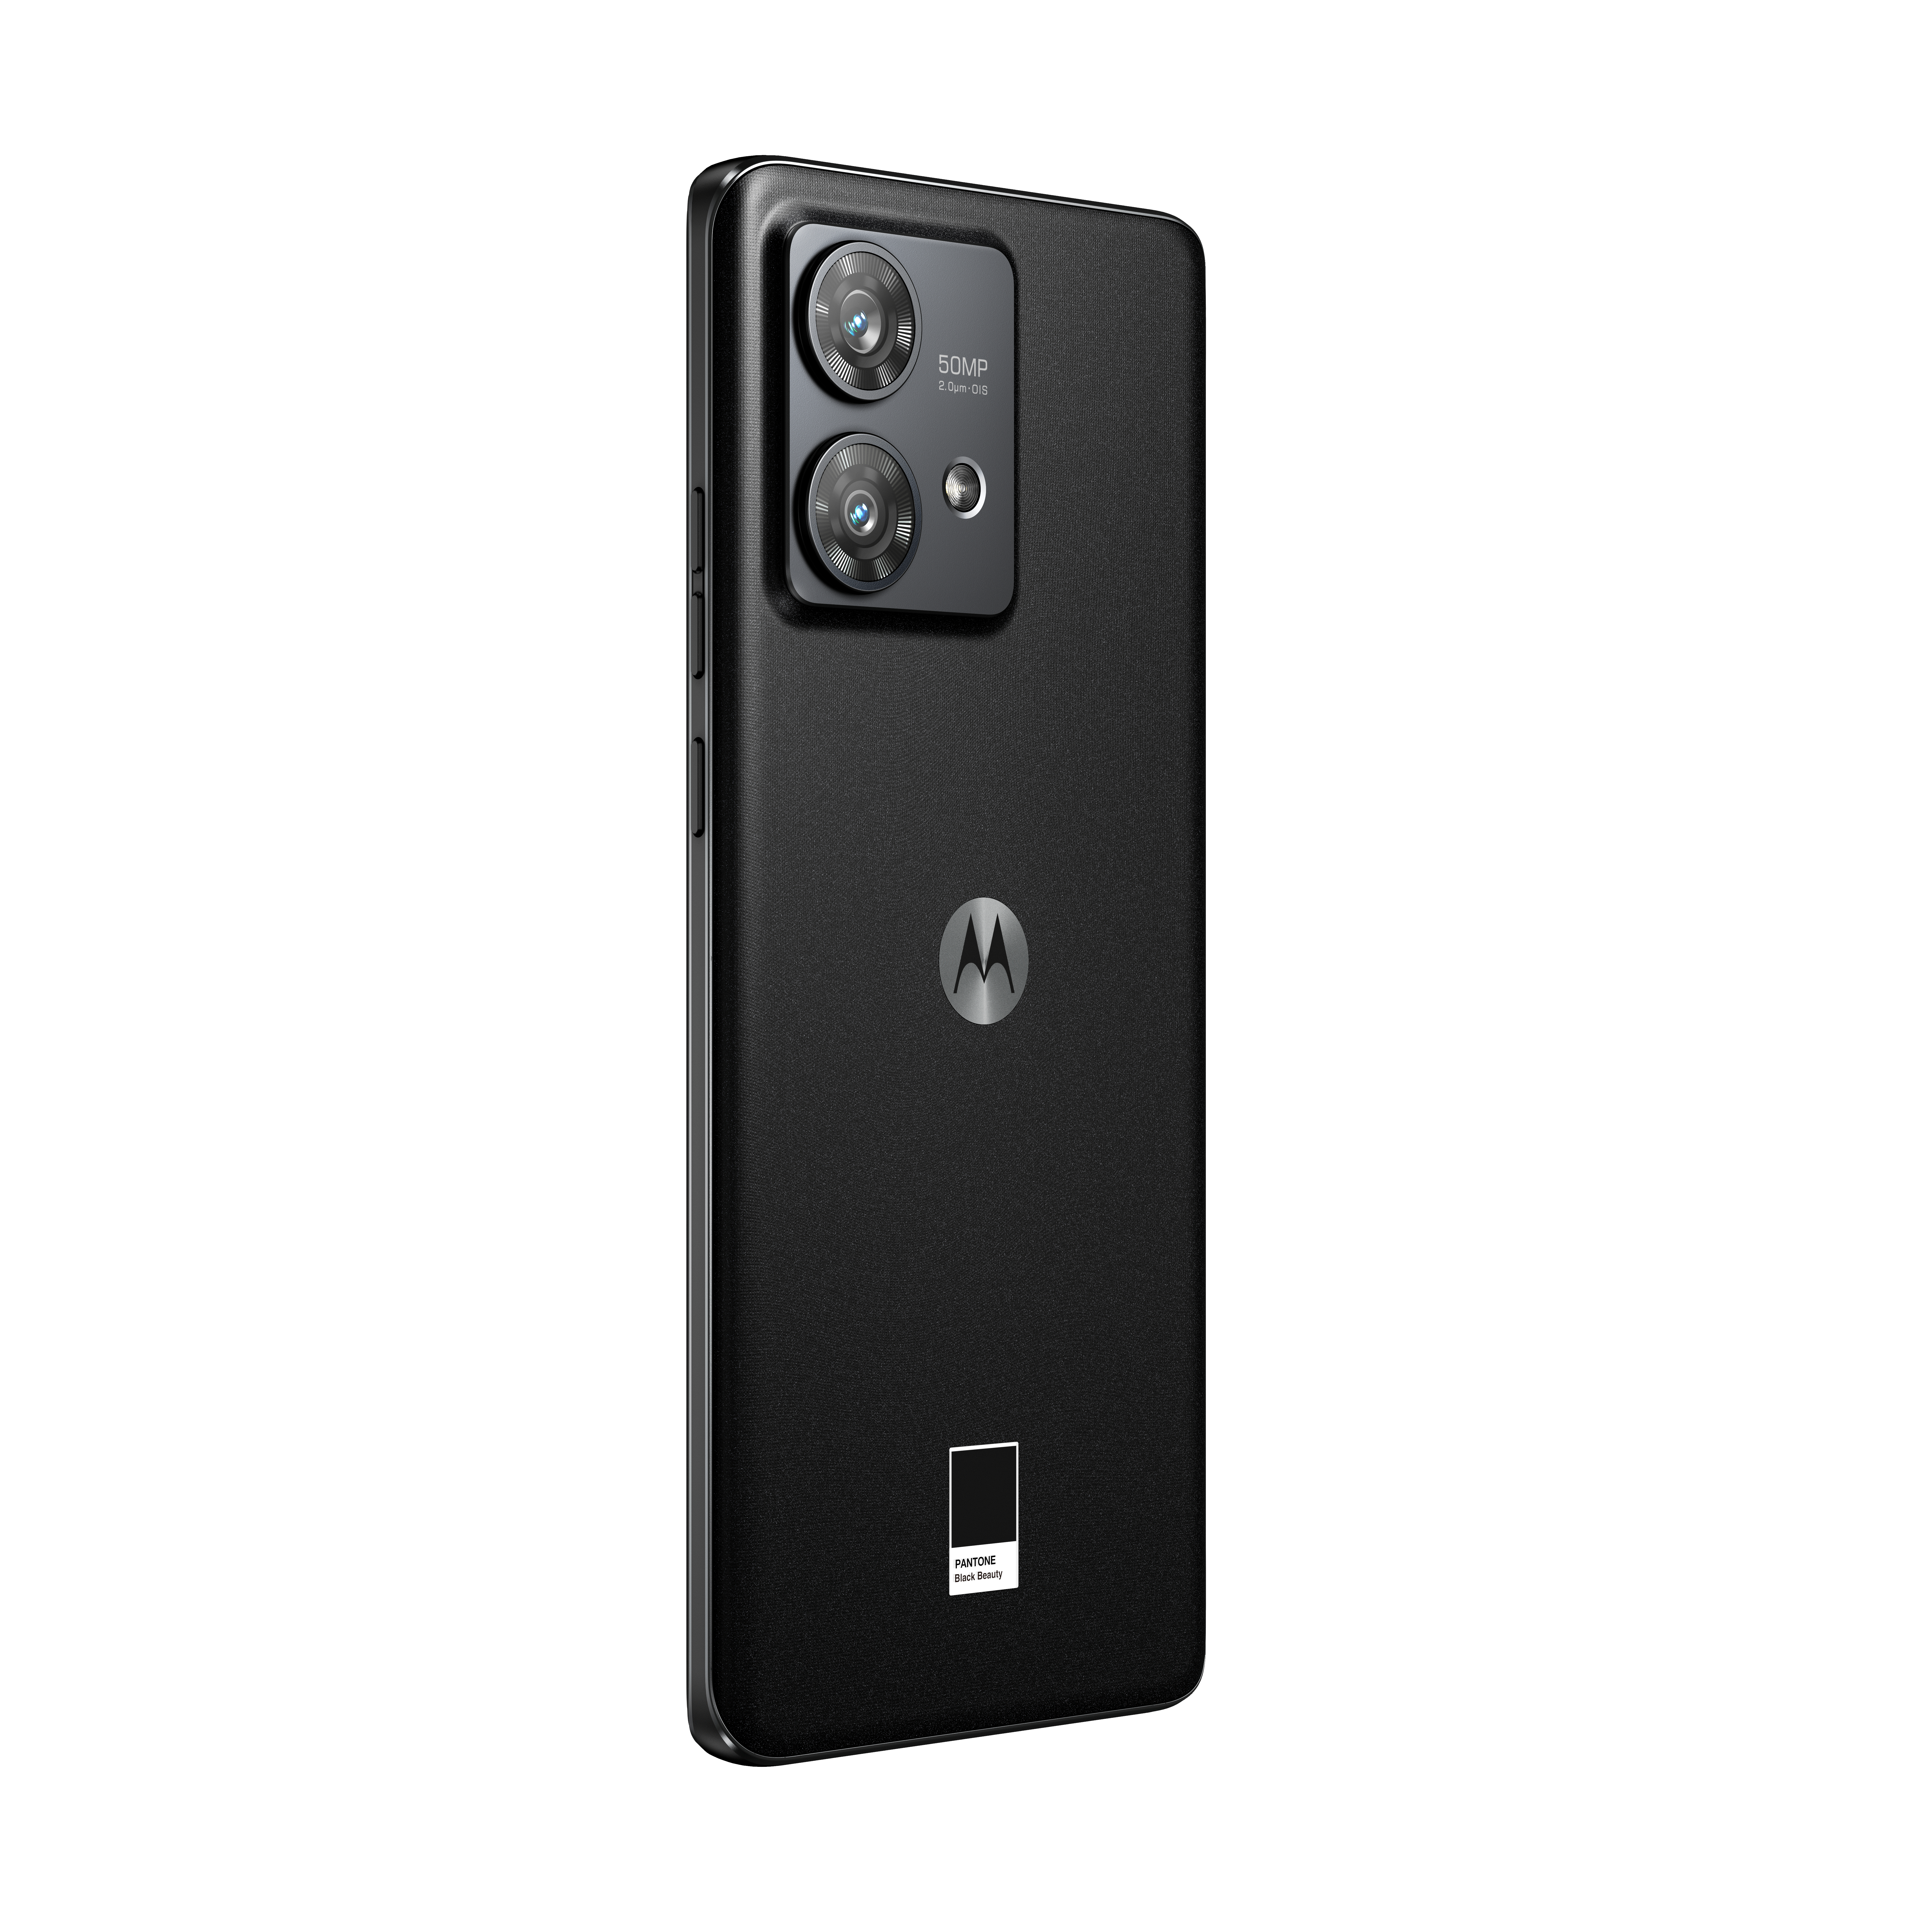 Motorola - Smartphone Motorola Moto Edge 40 NEO 5G 6.55" (12 GB/256 GB) 144Hz Dual Sim Negro